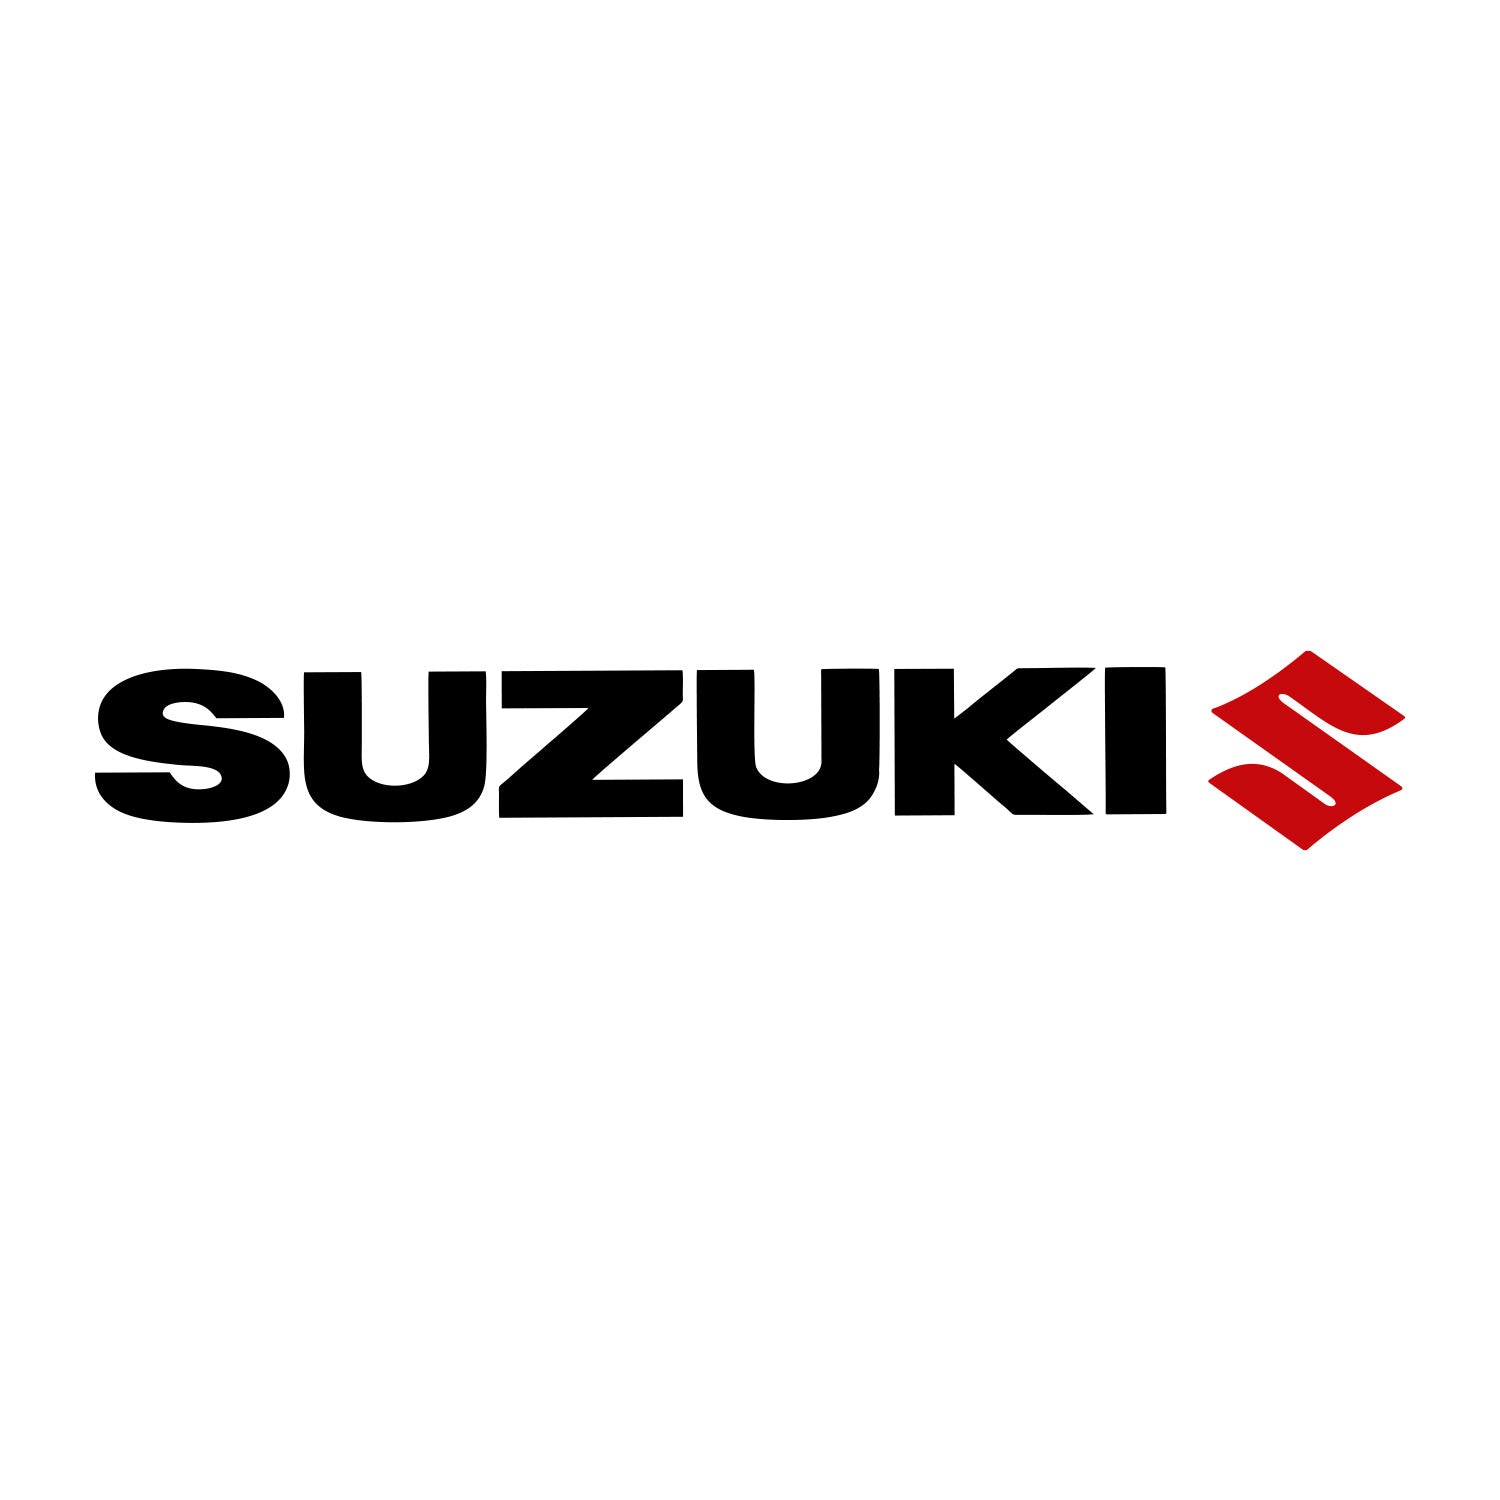 Suzuki Maşa Sticker (Beyaz-Kırmızı)